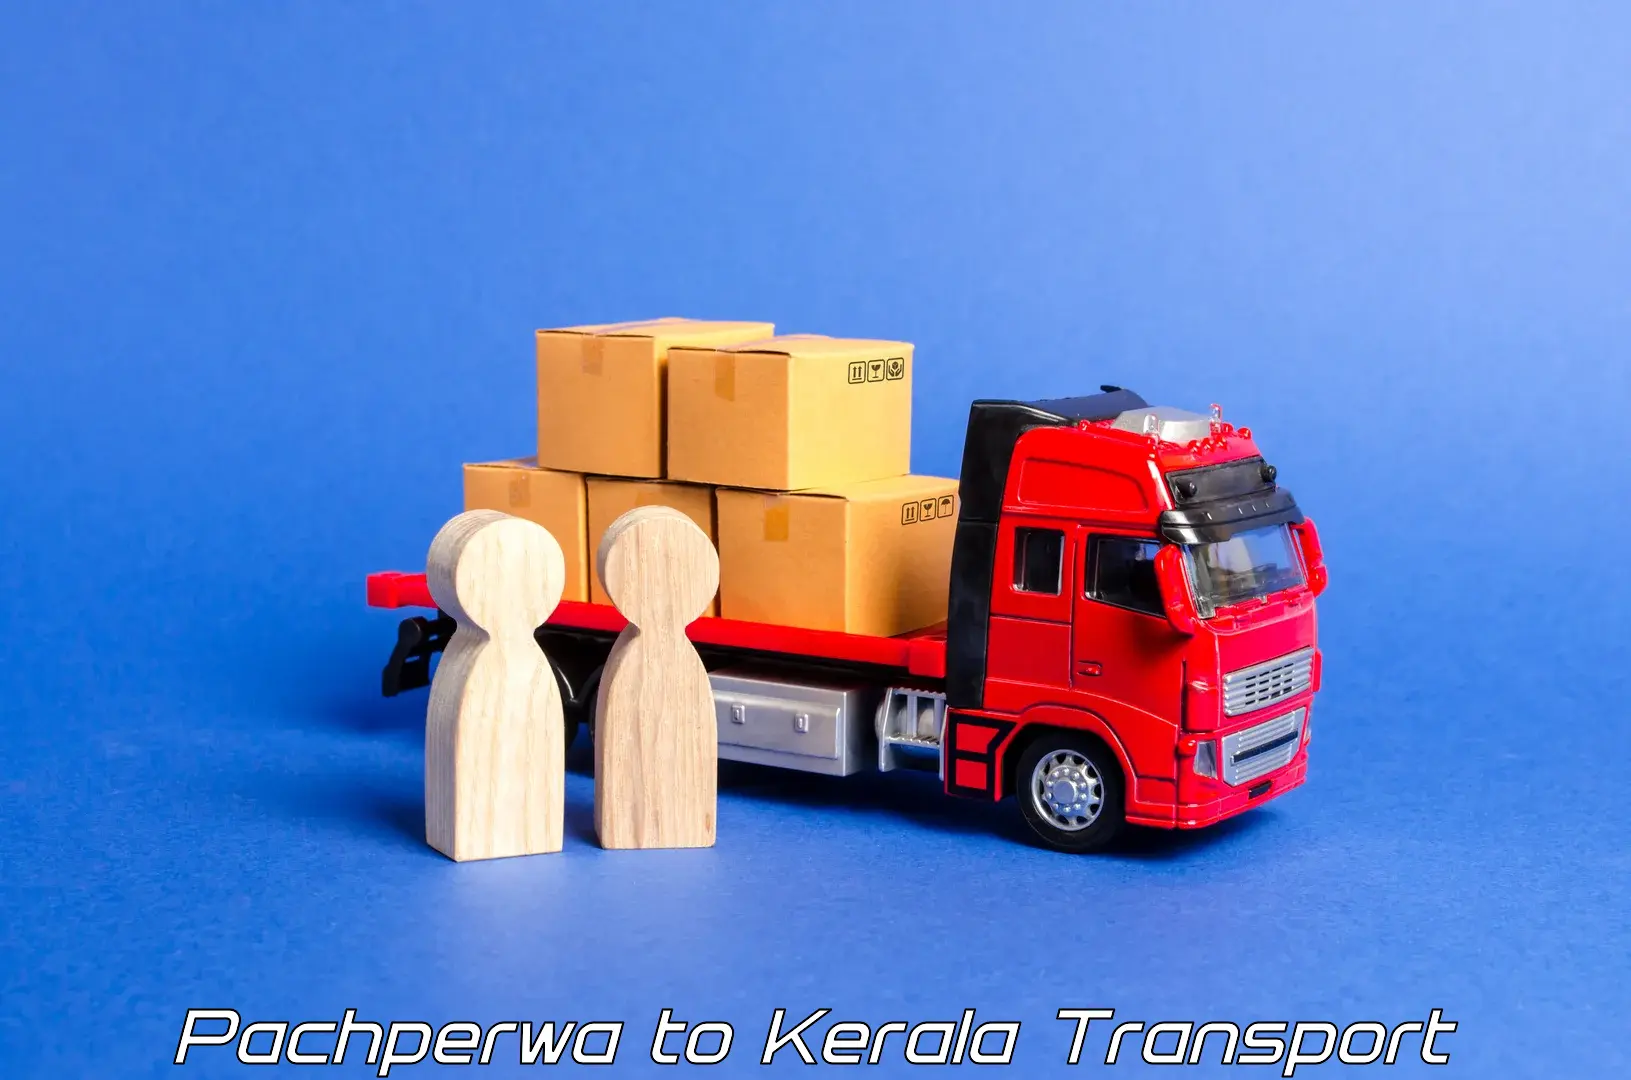 Two wheeler transport services Pachperwa to Kerala